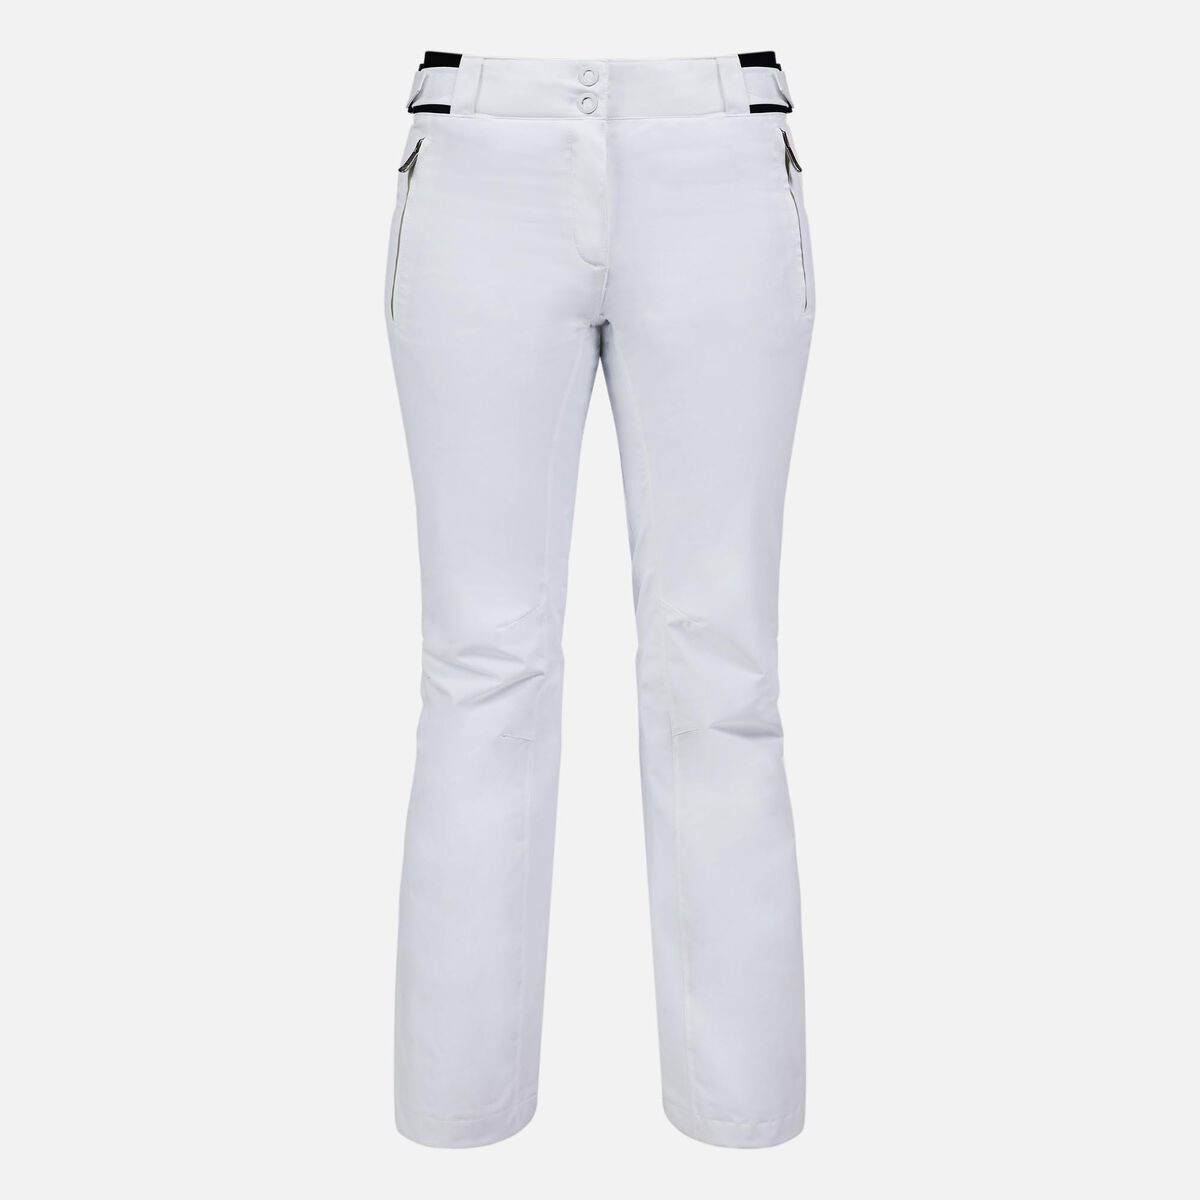 Rossignol Women's Ski Pants white